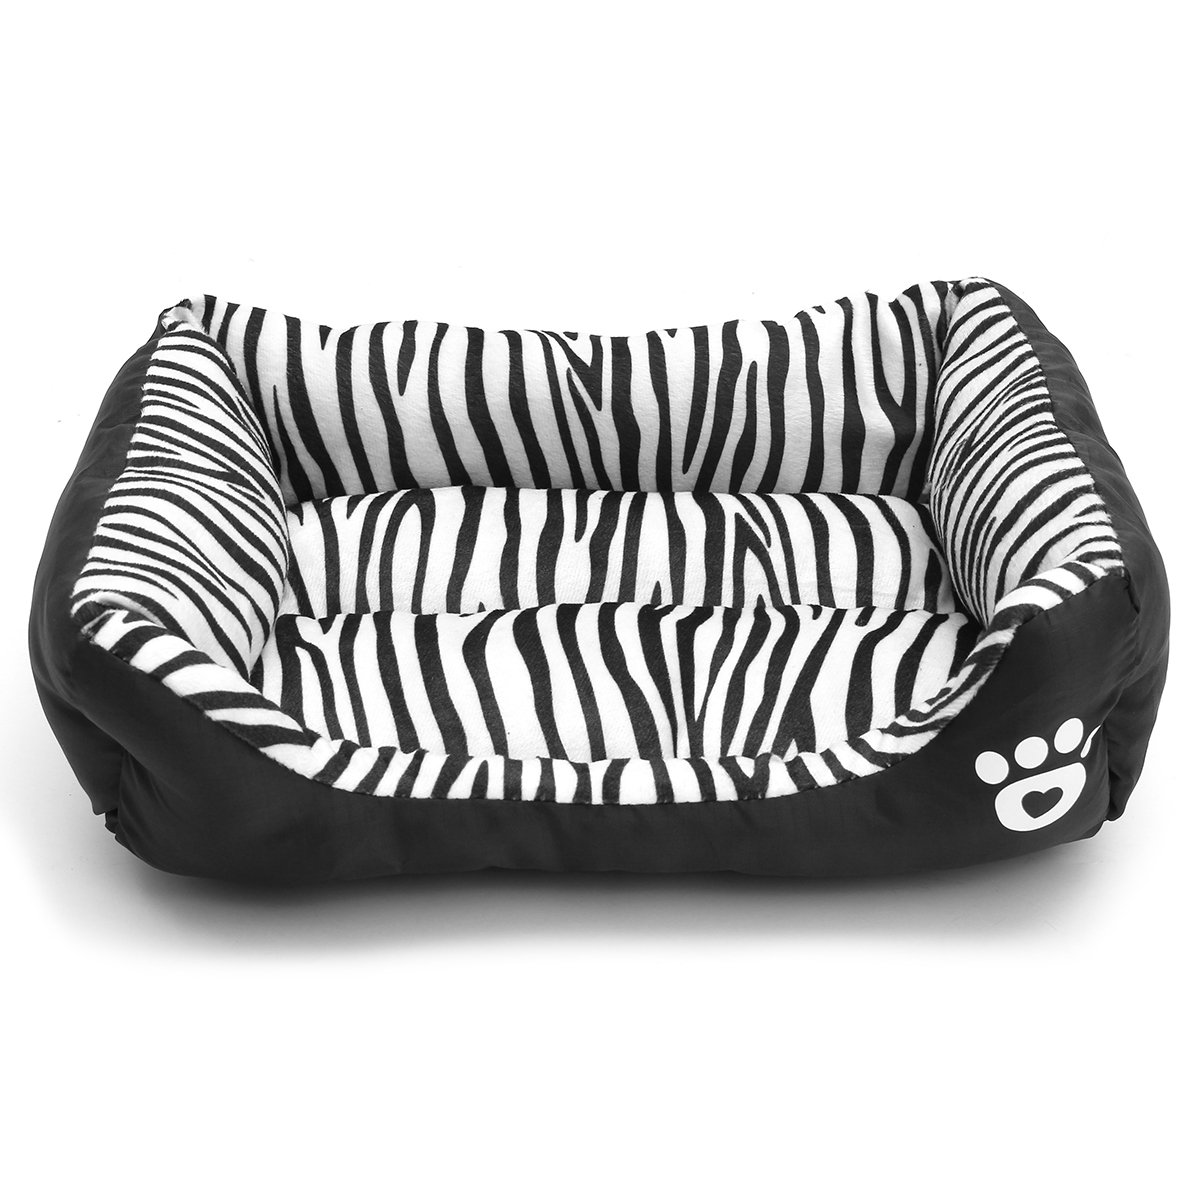 Waterproof Pet Bed Dog Warm Basket Cushion Fleece Lining Washable Mattress S M L